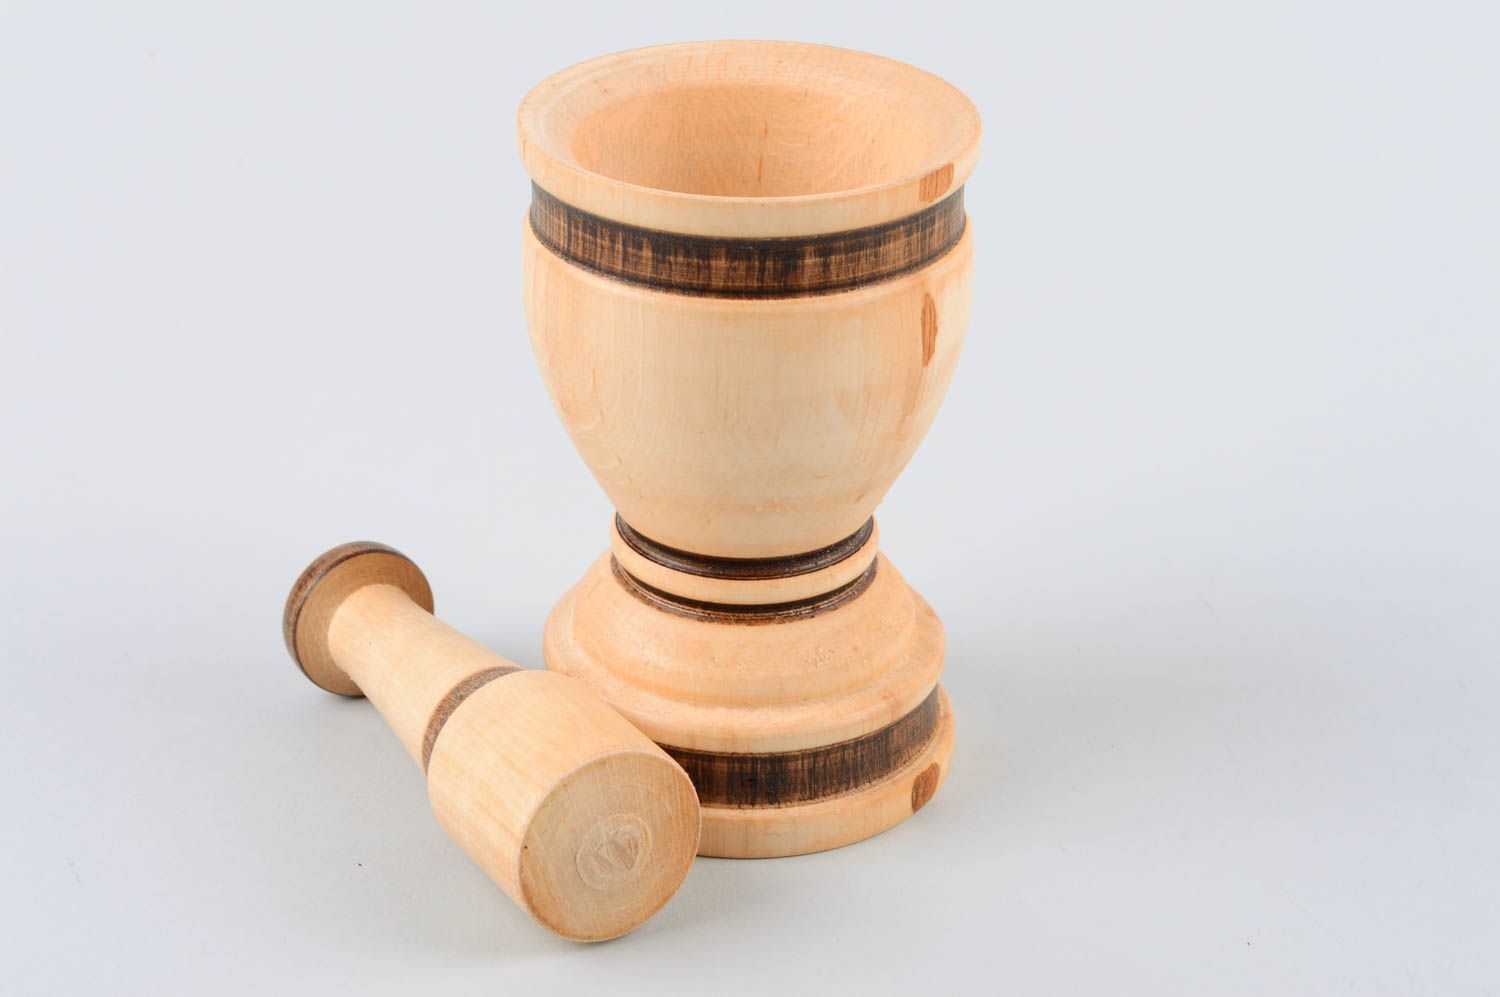 Handmade wooden mortar and pestle wooden hand spice grinder kitchen accessories photo 2